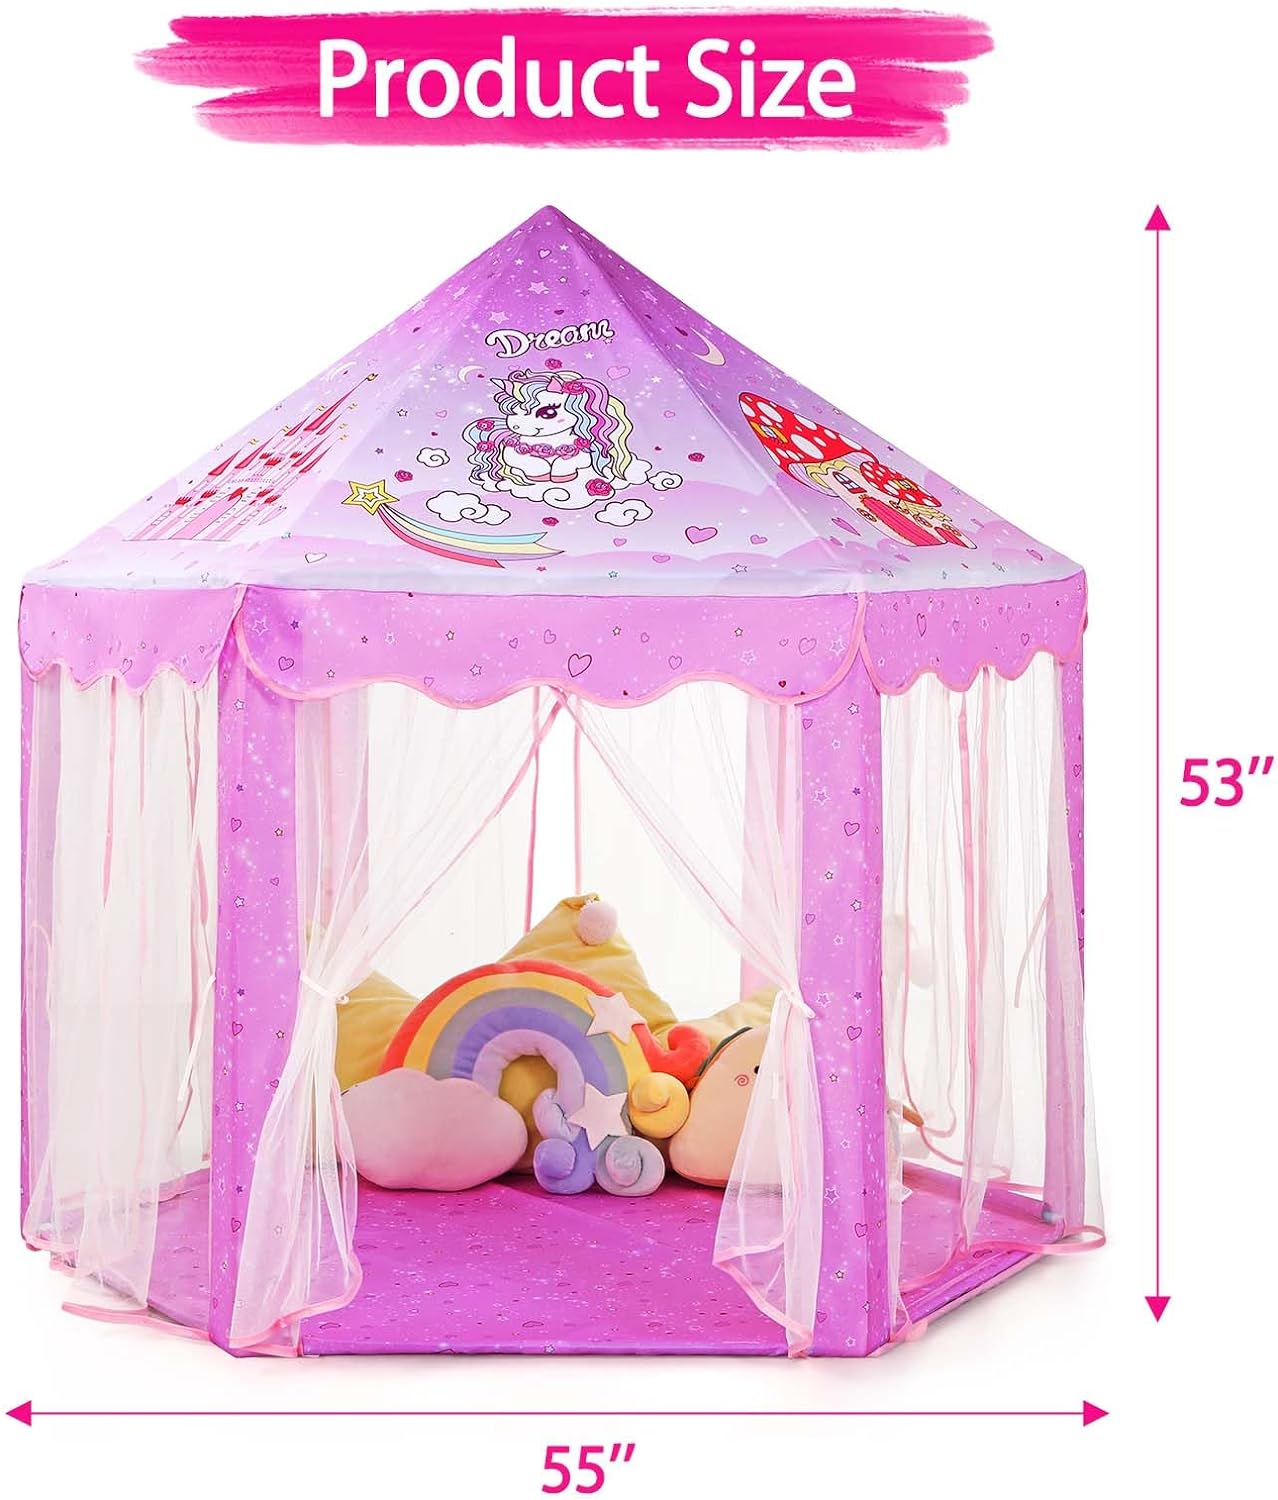 Monobeach Princess Tent Girls Large Playhouse Kids Castle Play